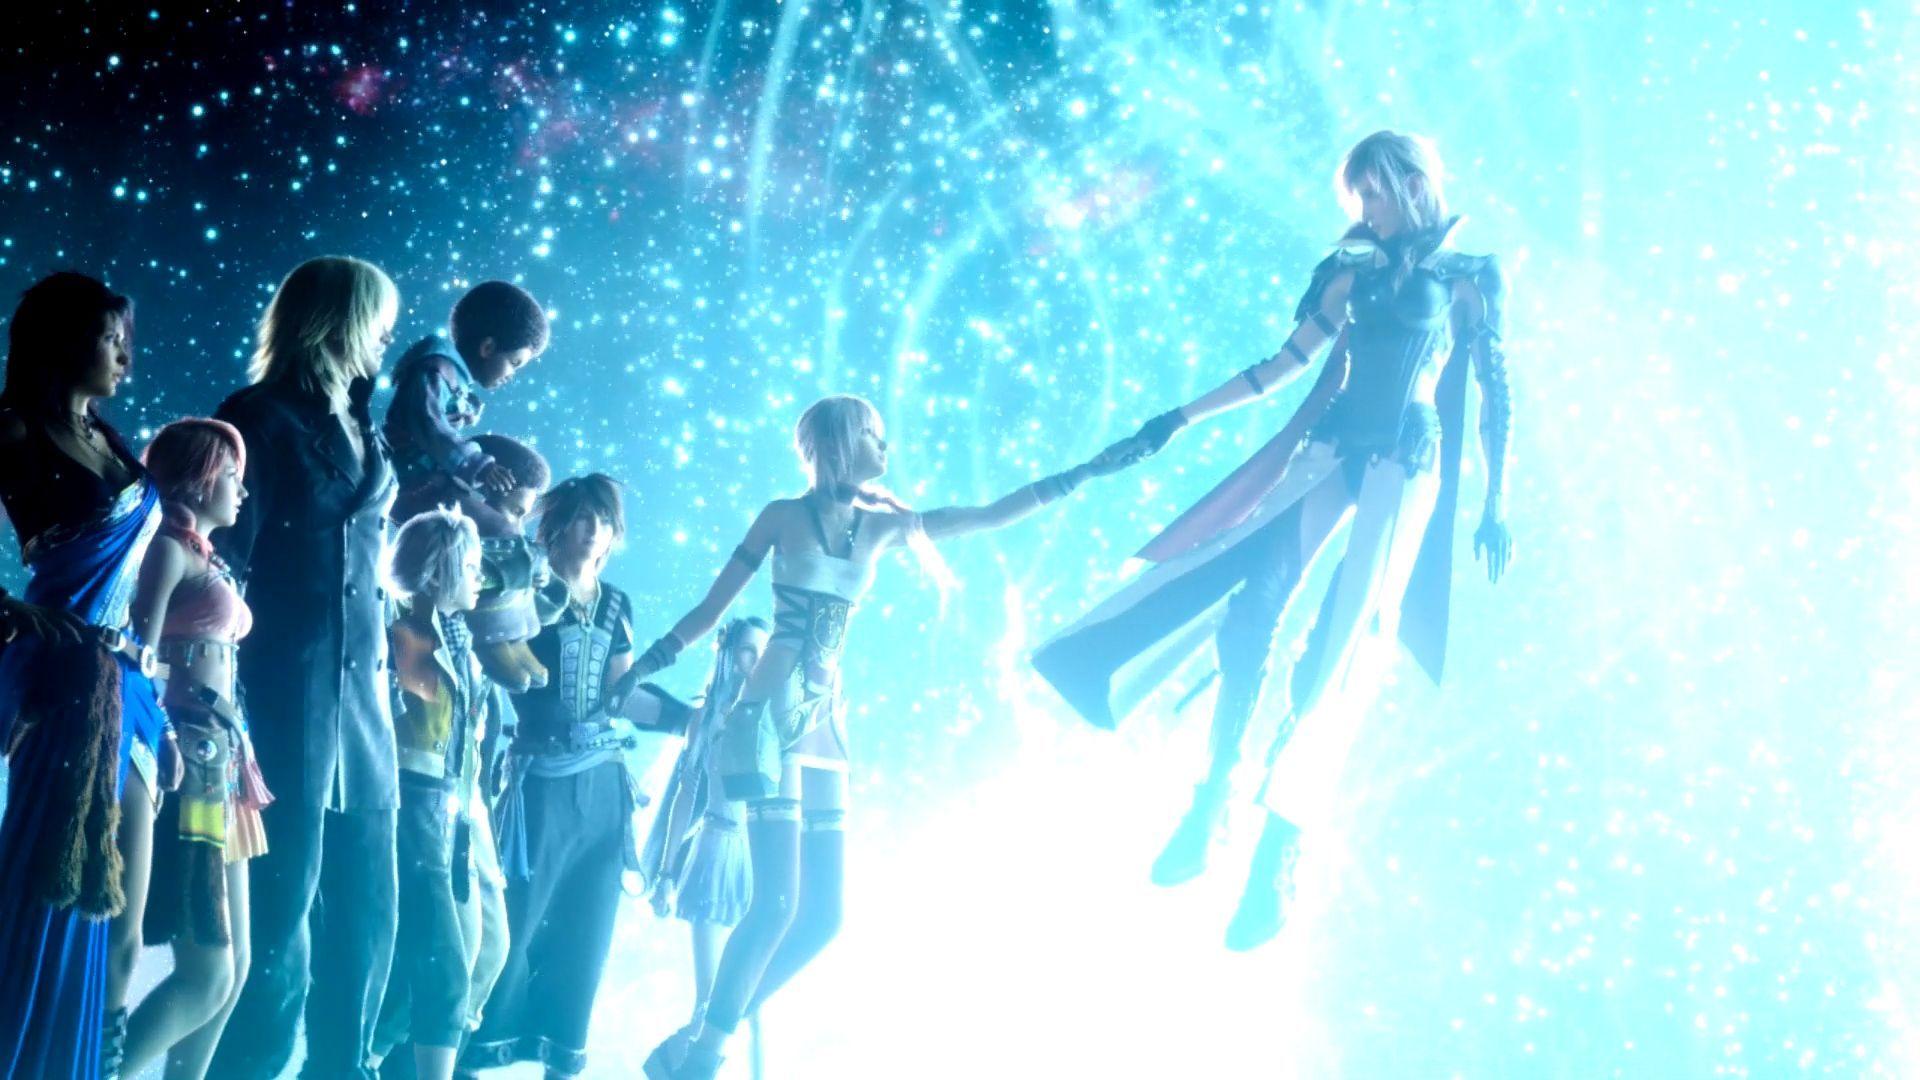 Final Fantasy XIII Lightning Returns. CG. Final